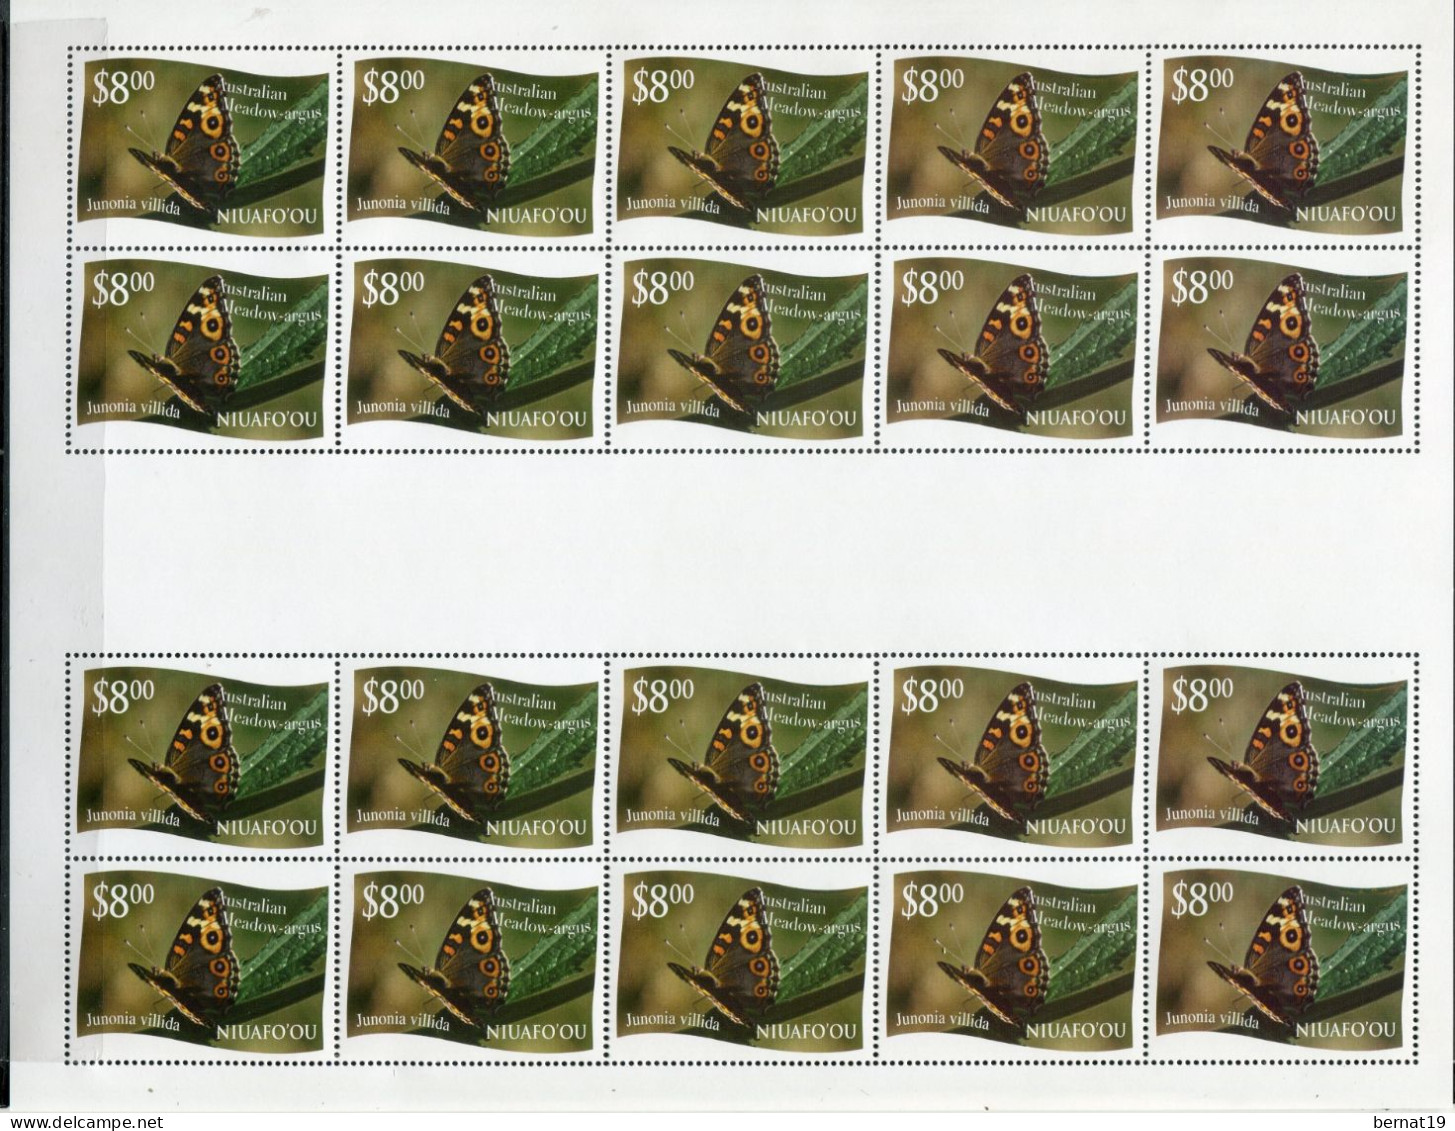 Tonga-Niuafo'ou 2012. Yvert 321-32 x 20 en pliegos ** MNH Butterflies (VC 1.800€)